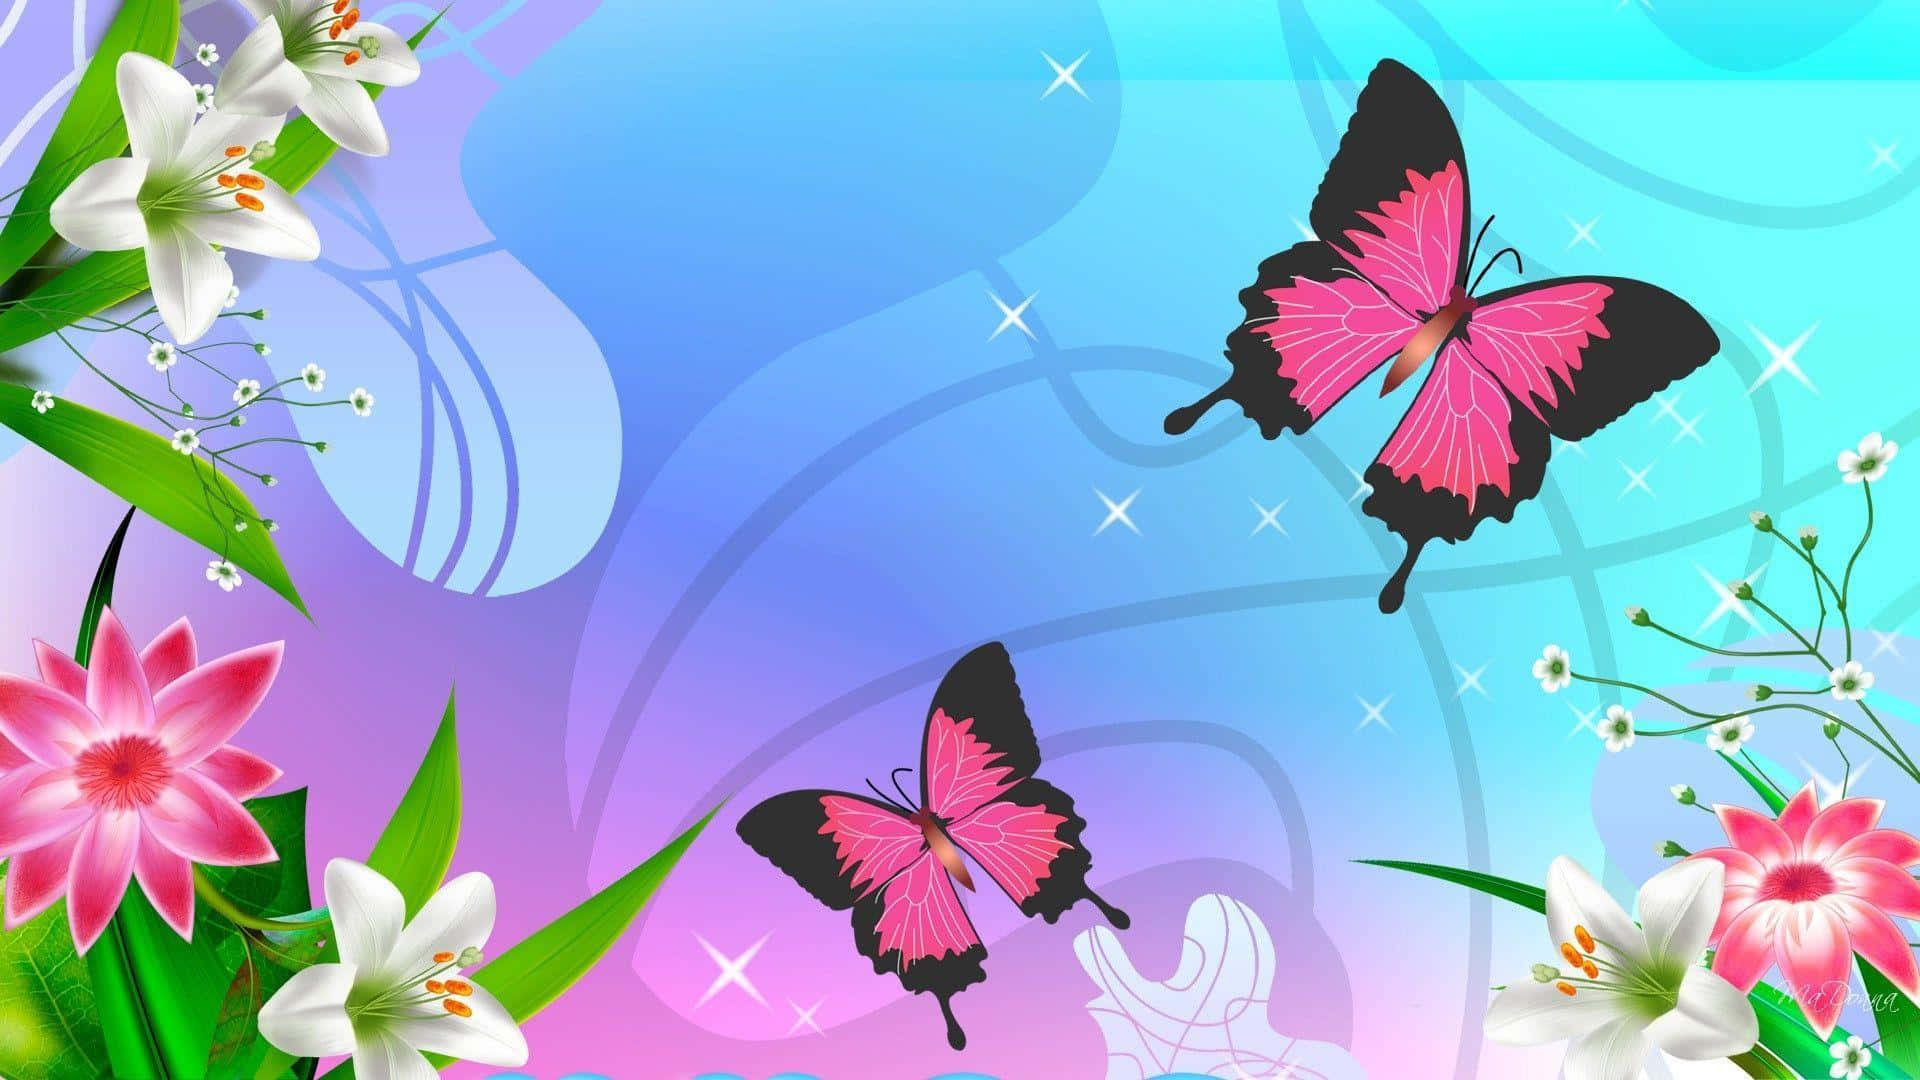 Transcend spacetime on your Butterfly Desktop Wallpaper